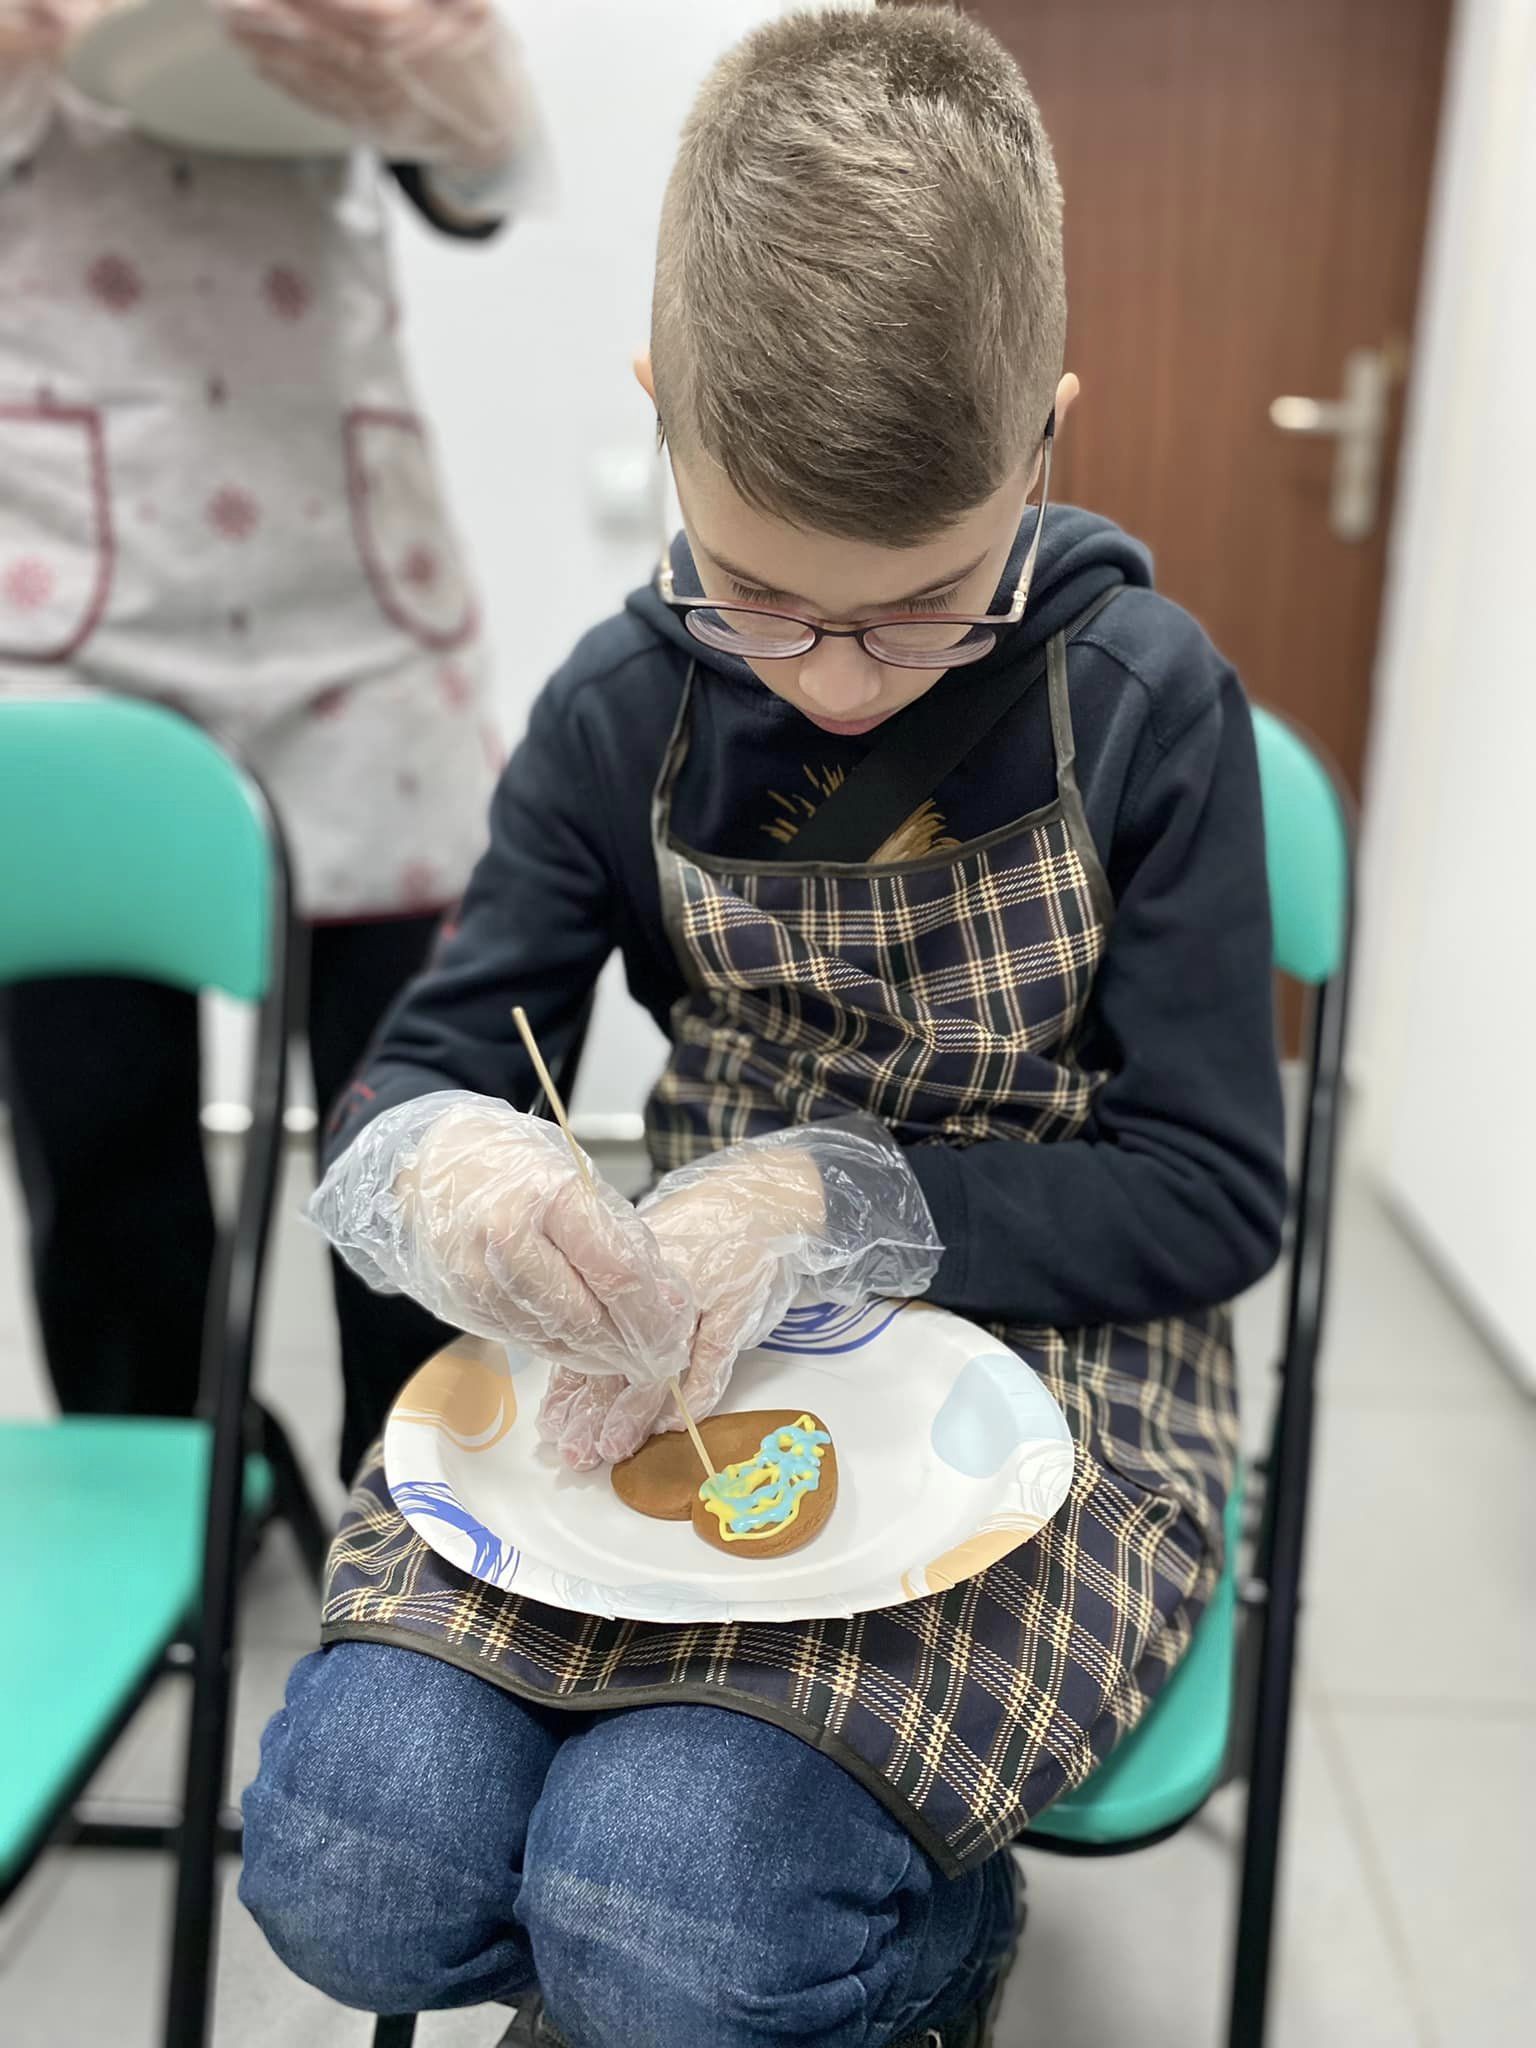 Михайлик Малик створює патріотичне печиво. Фото надав автор